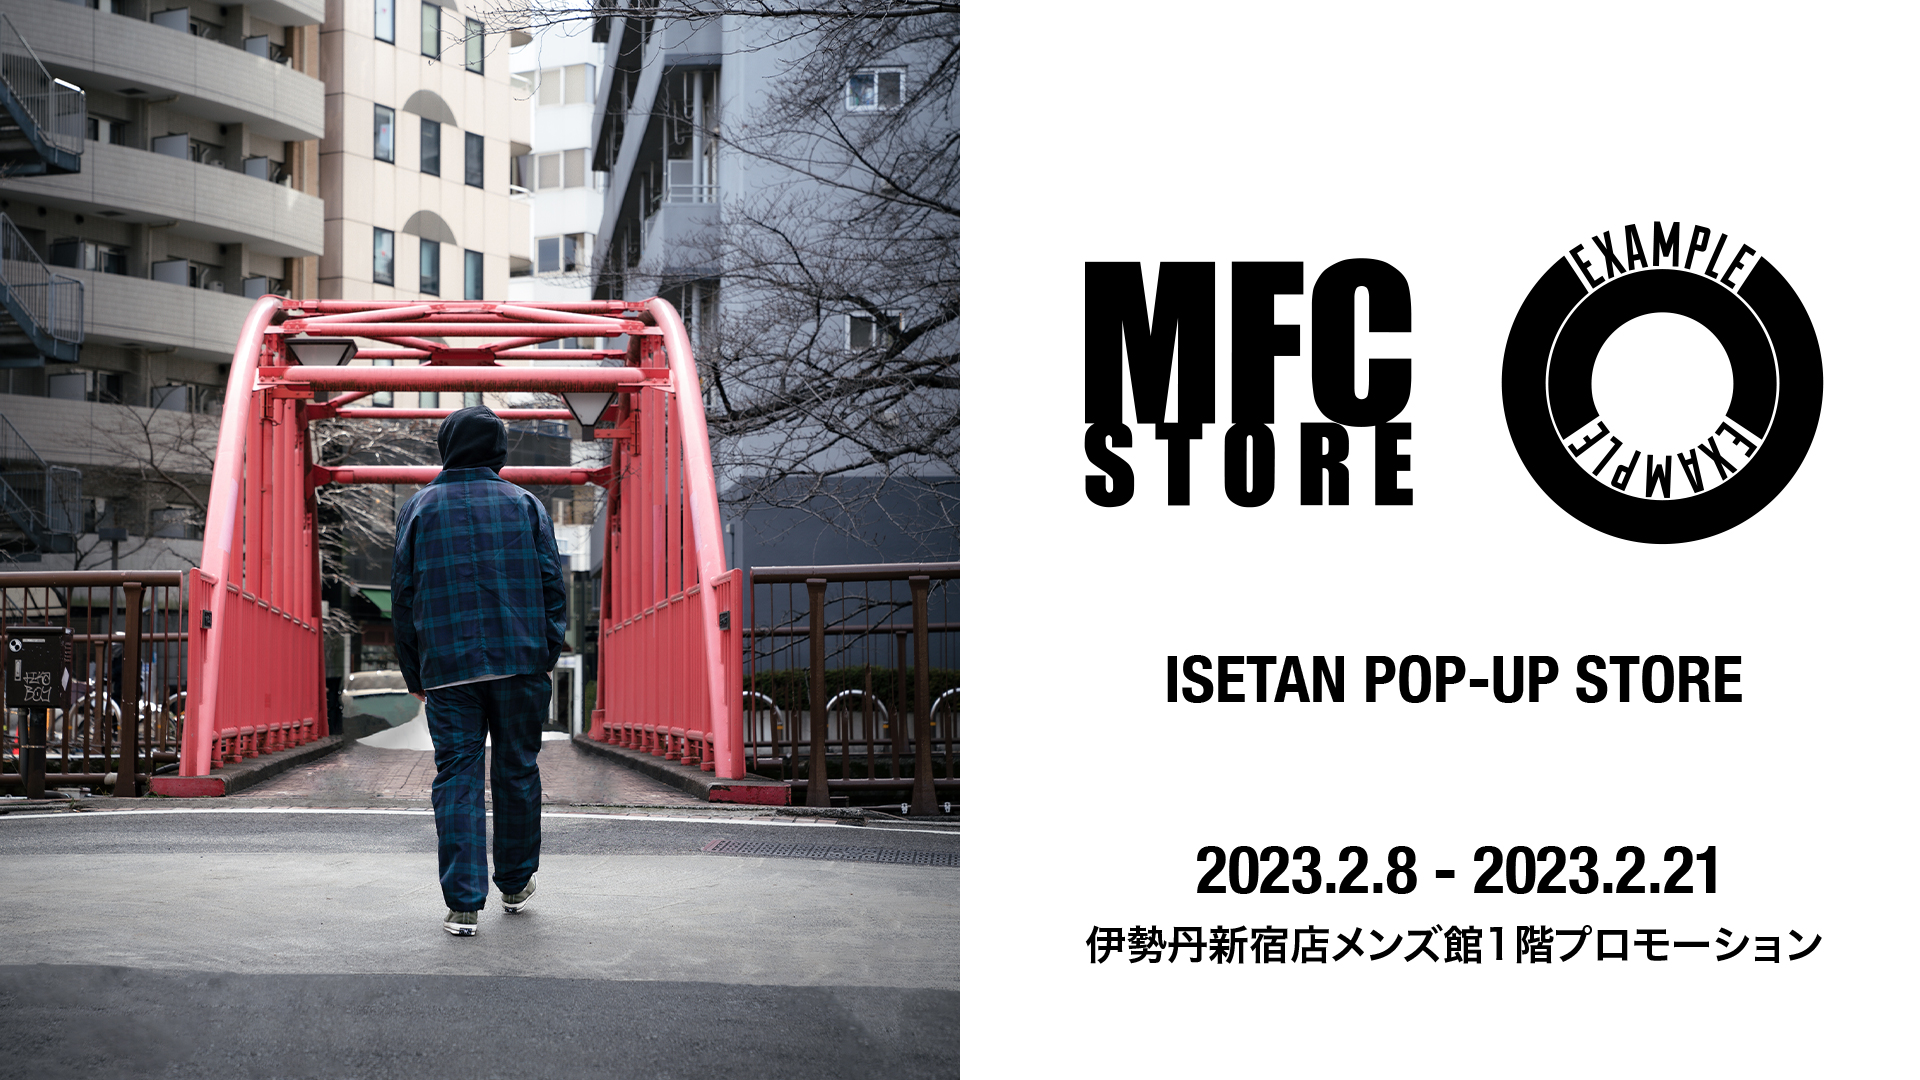 MFC STORE」「EXAMPLE」によるPOP UP STOREを、伊勢丹新宿店にて開催